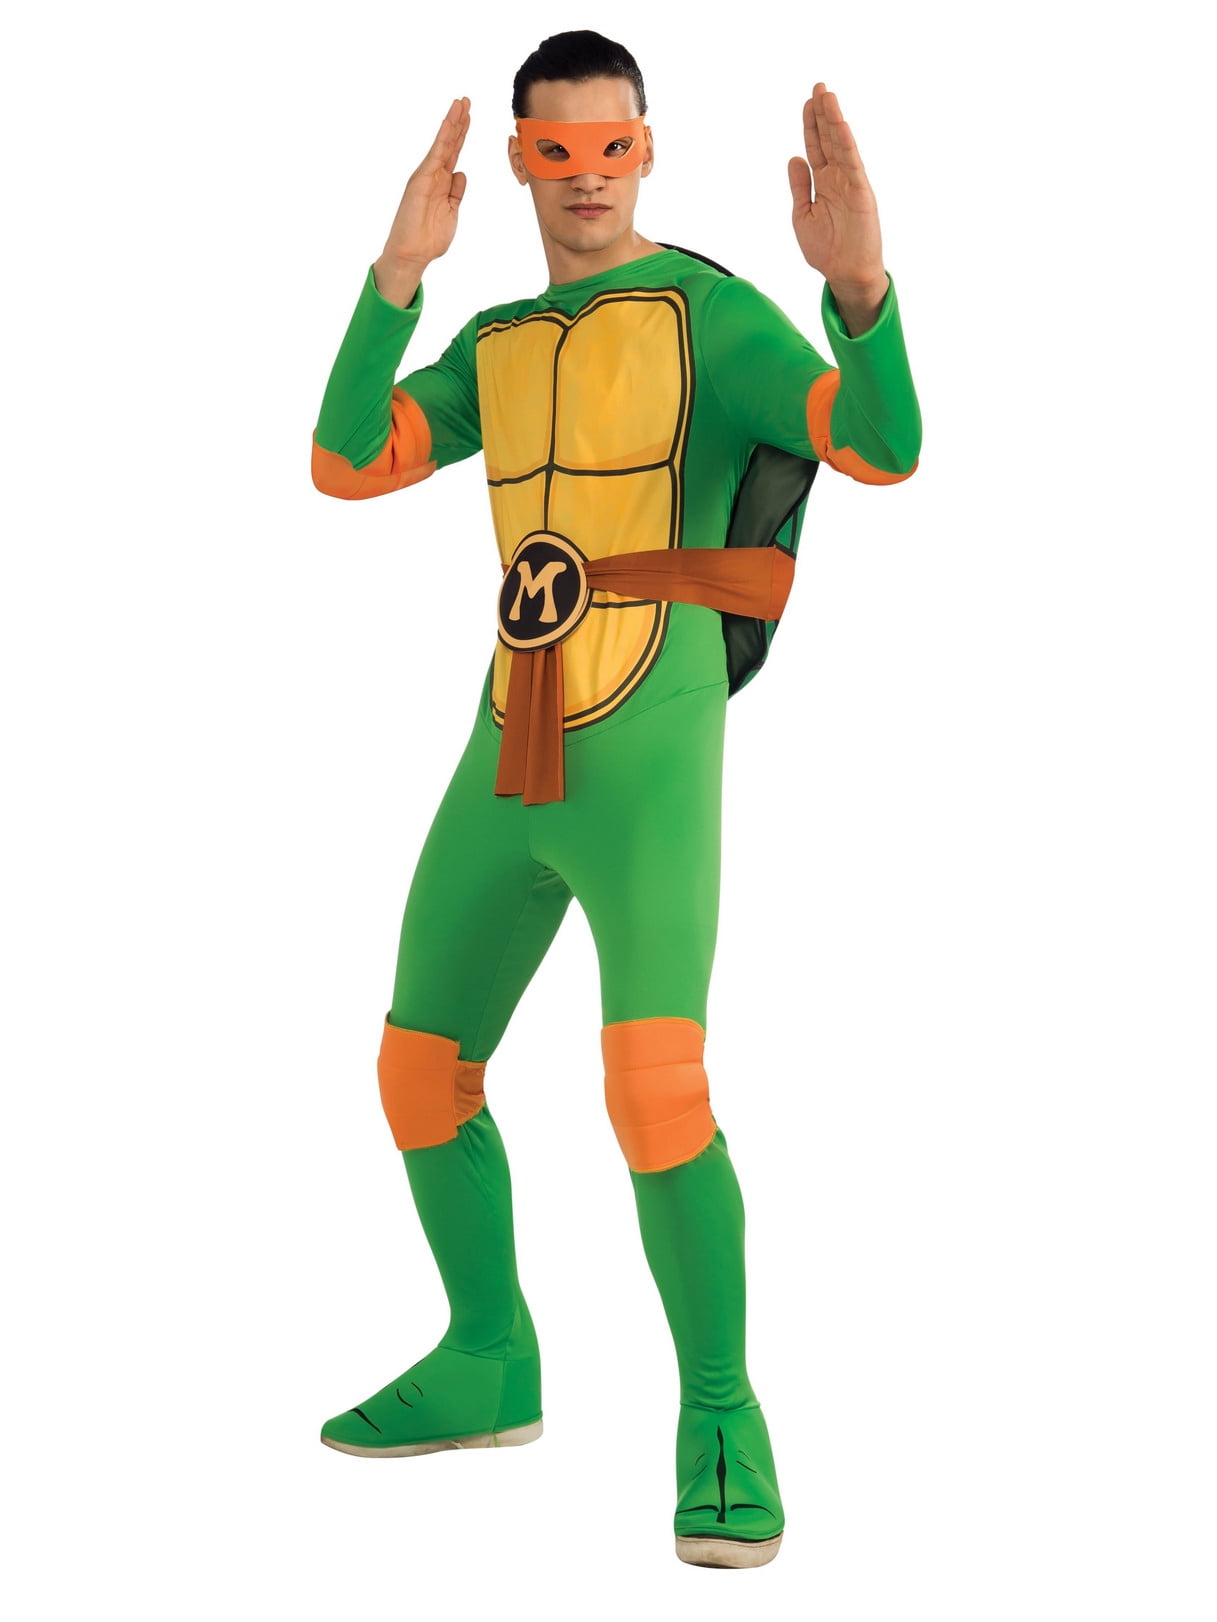 Picture of BuySeasons 401796 Teenage Mutant Ninja Turtles Michelangelo Adult Costume, Medium